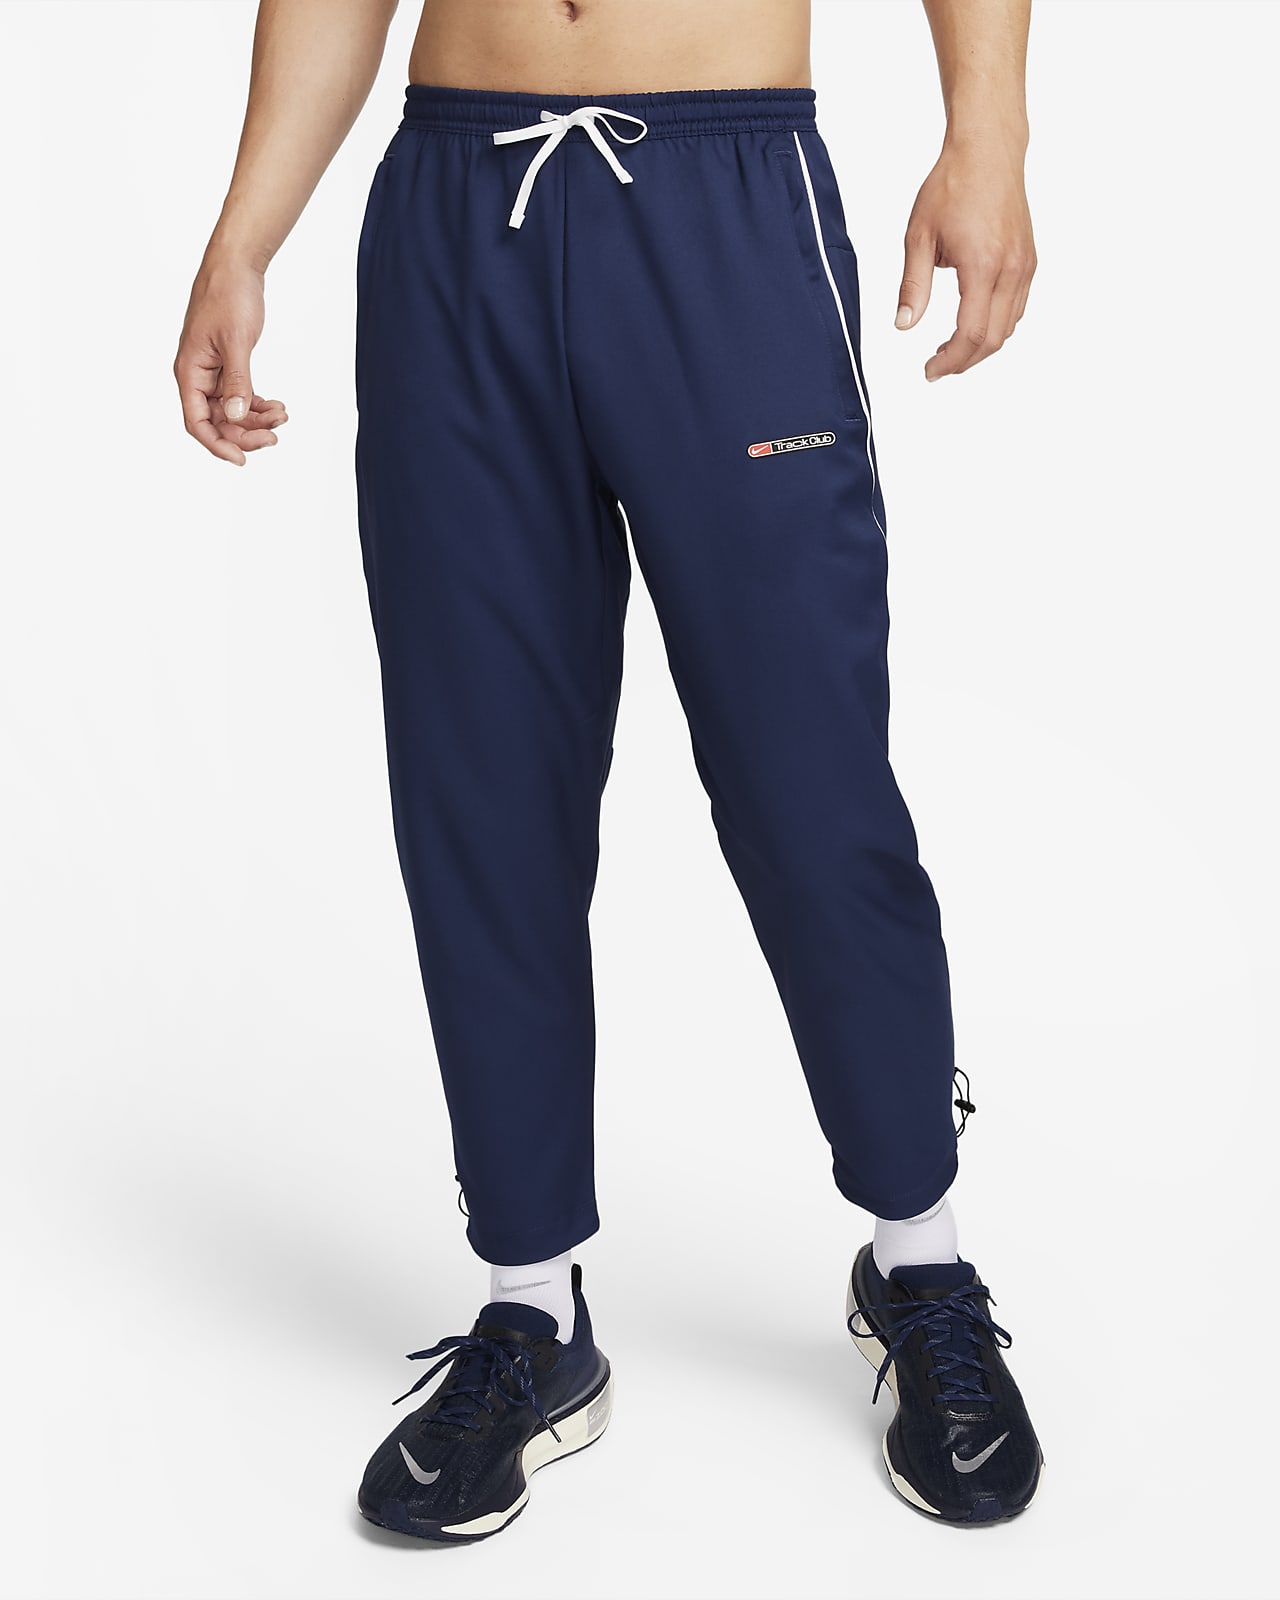 Nike Drawstring Active Pants for Men | Mercari